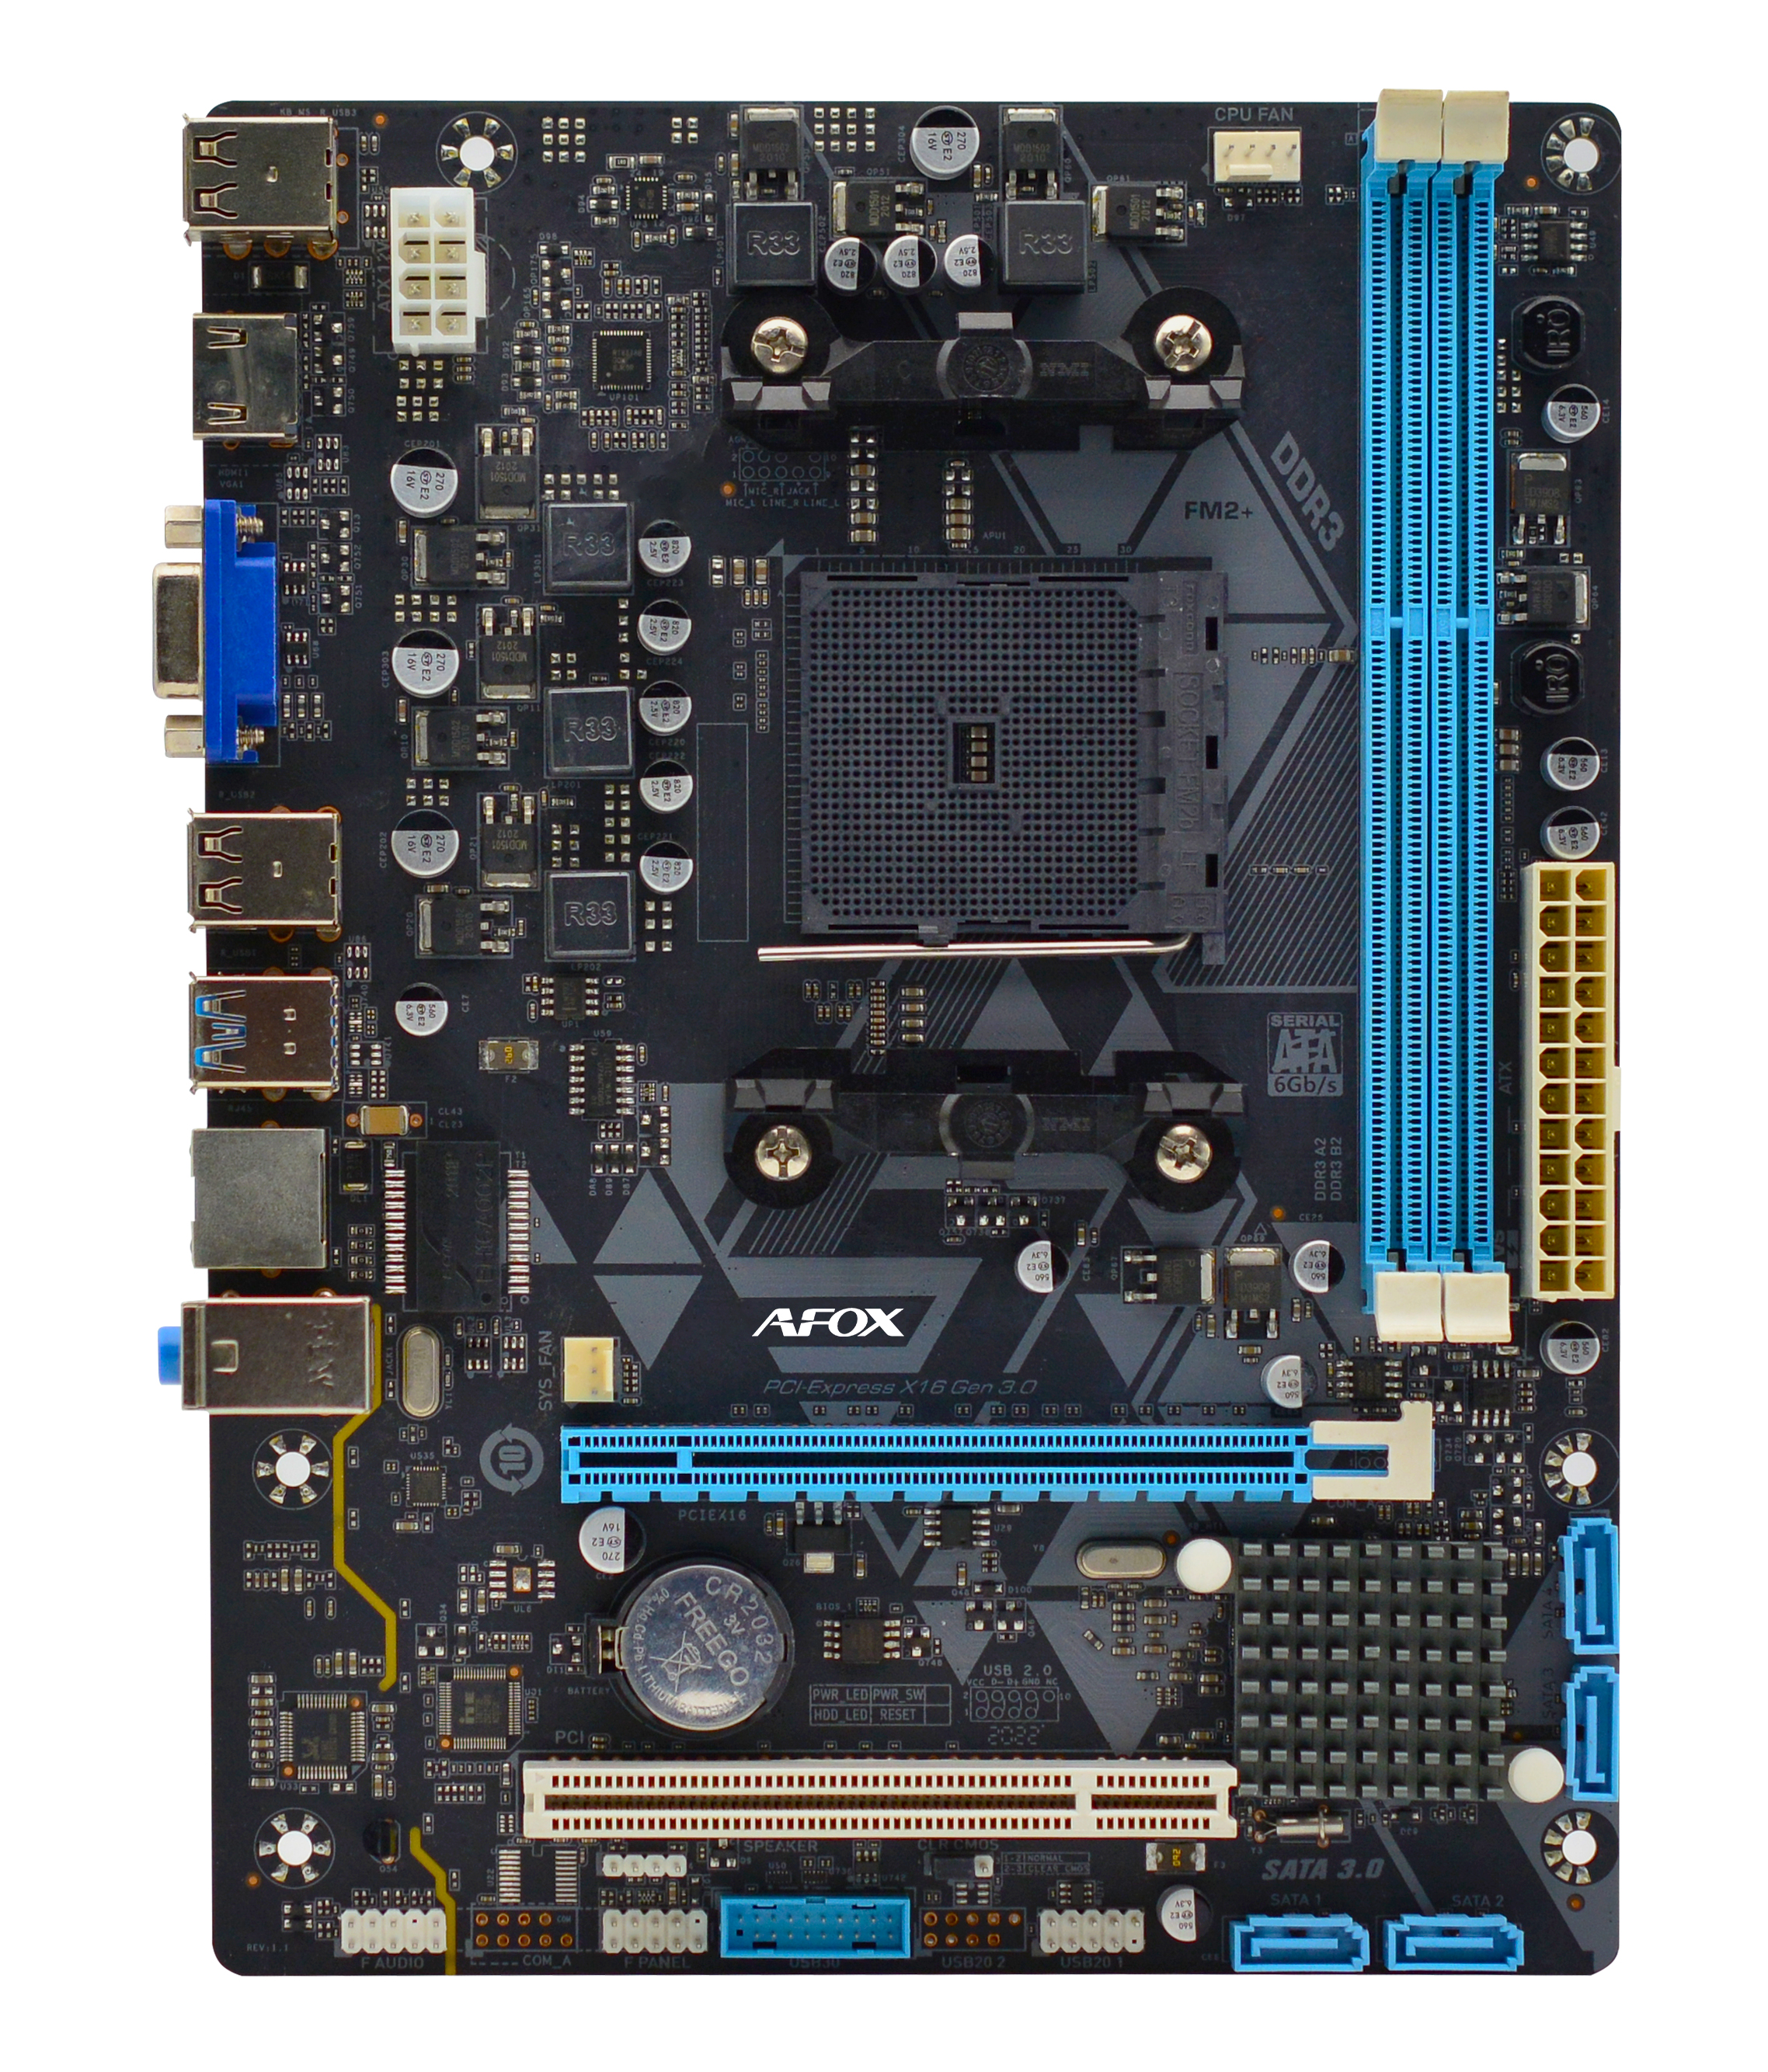 Материнская плата AFOX A88-MA5, SocketFM2+, AMD A88, 2xDDR3, PCI-Ex16, 5.1-ch, 4 USB 3.0, VGA, HDMI, mATX, Retail